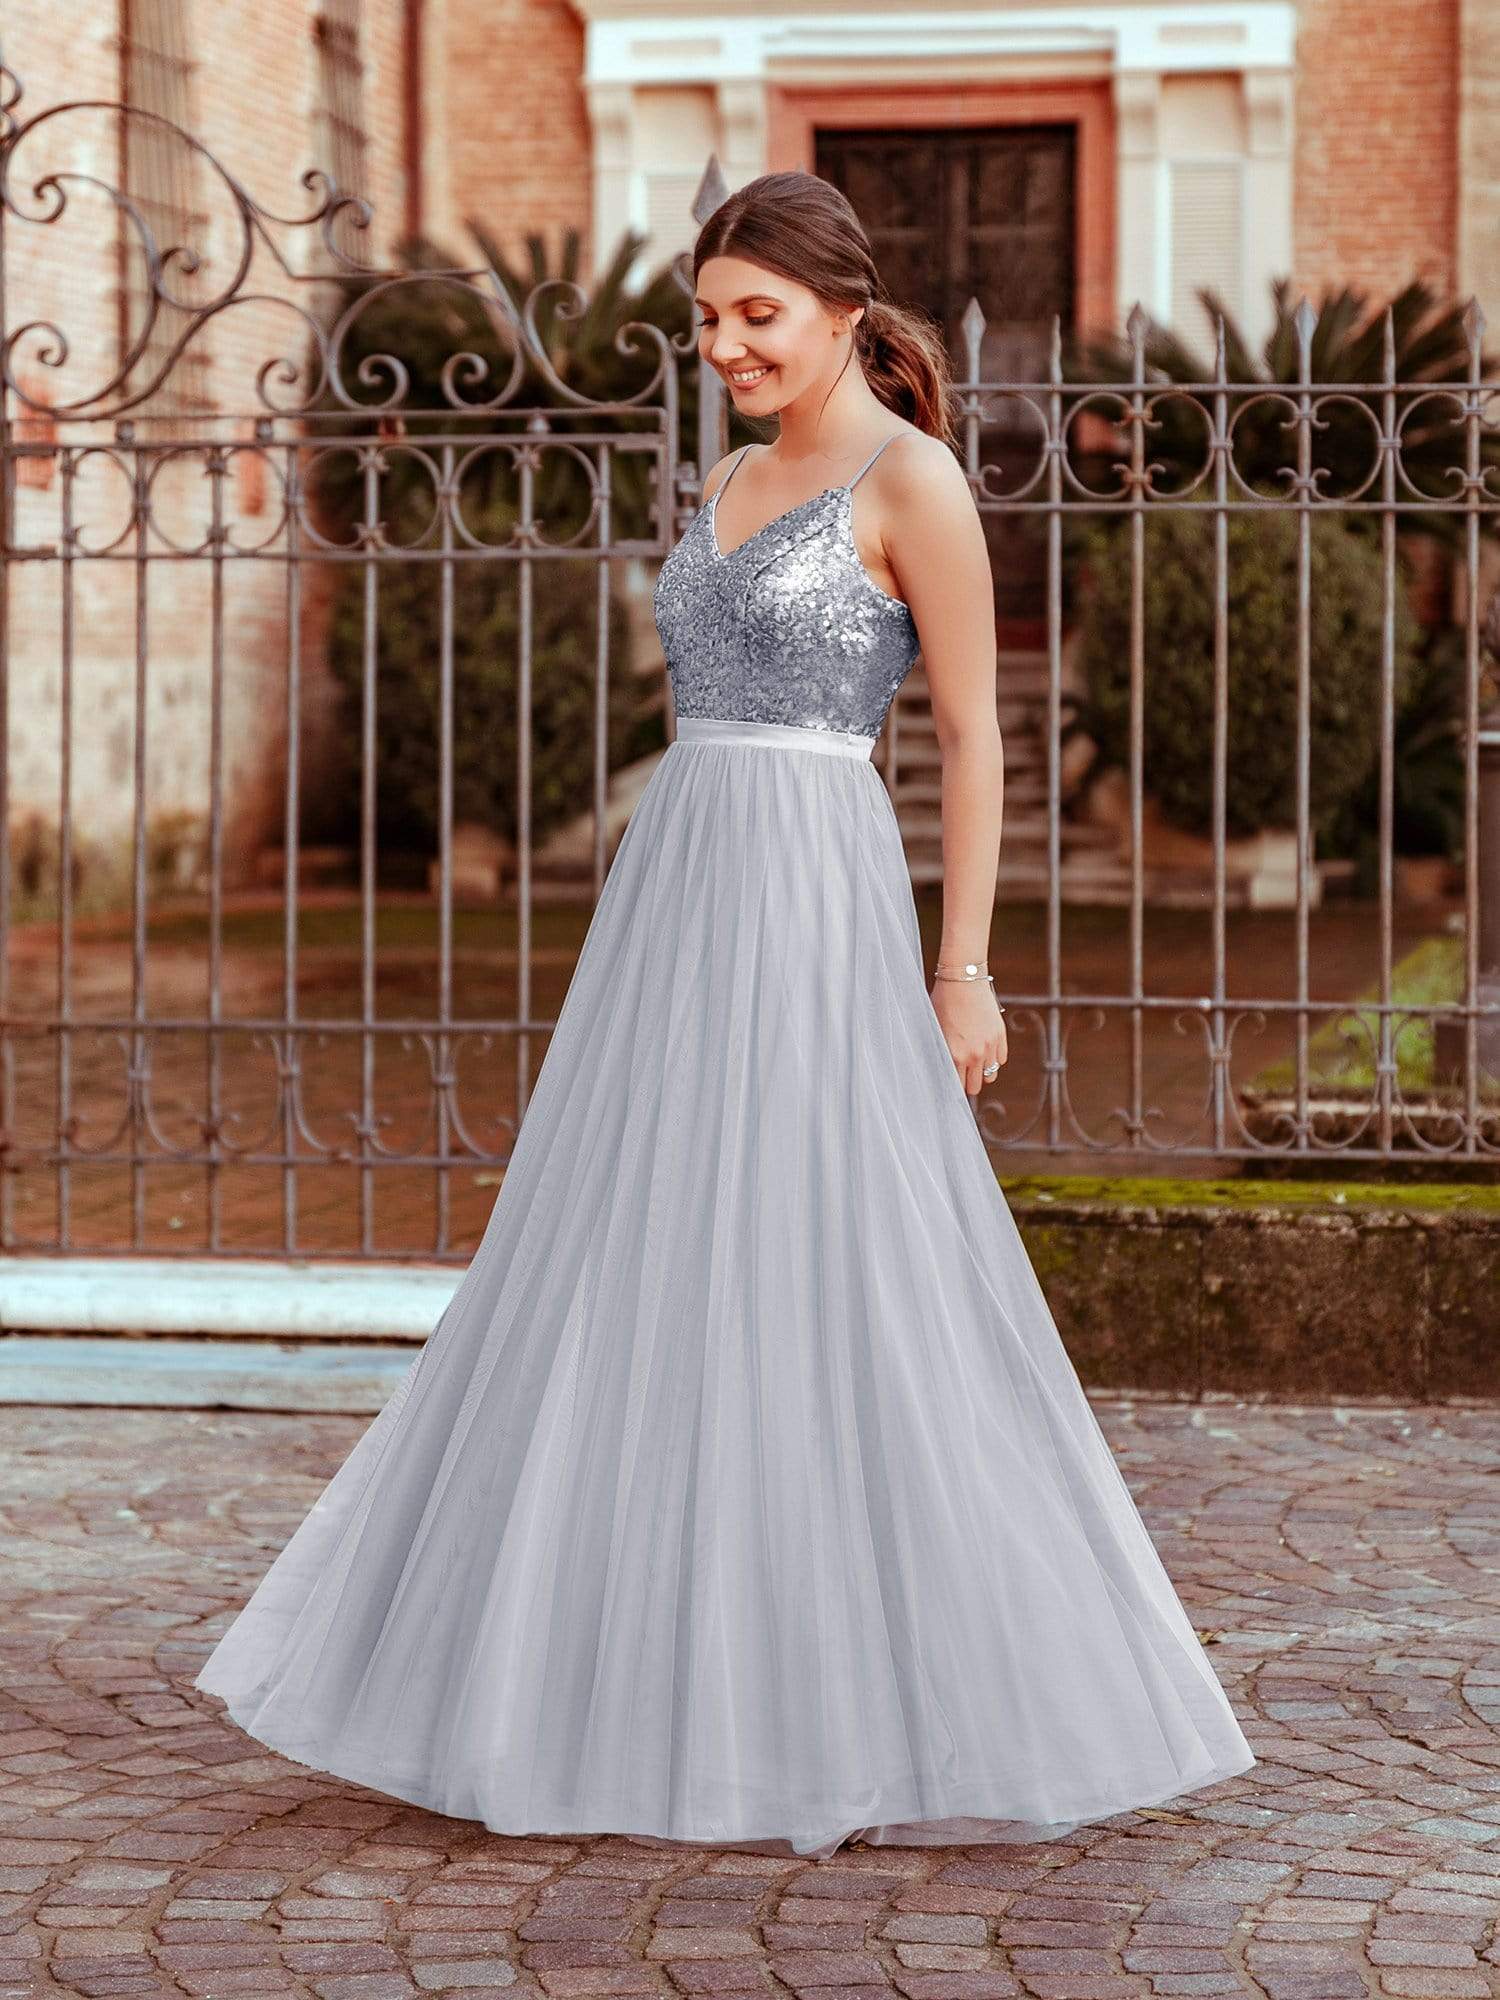 silver sequin floor length dress